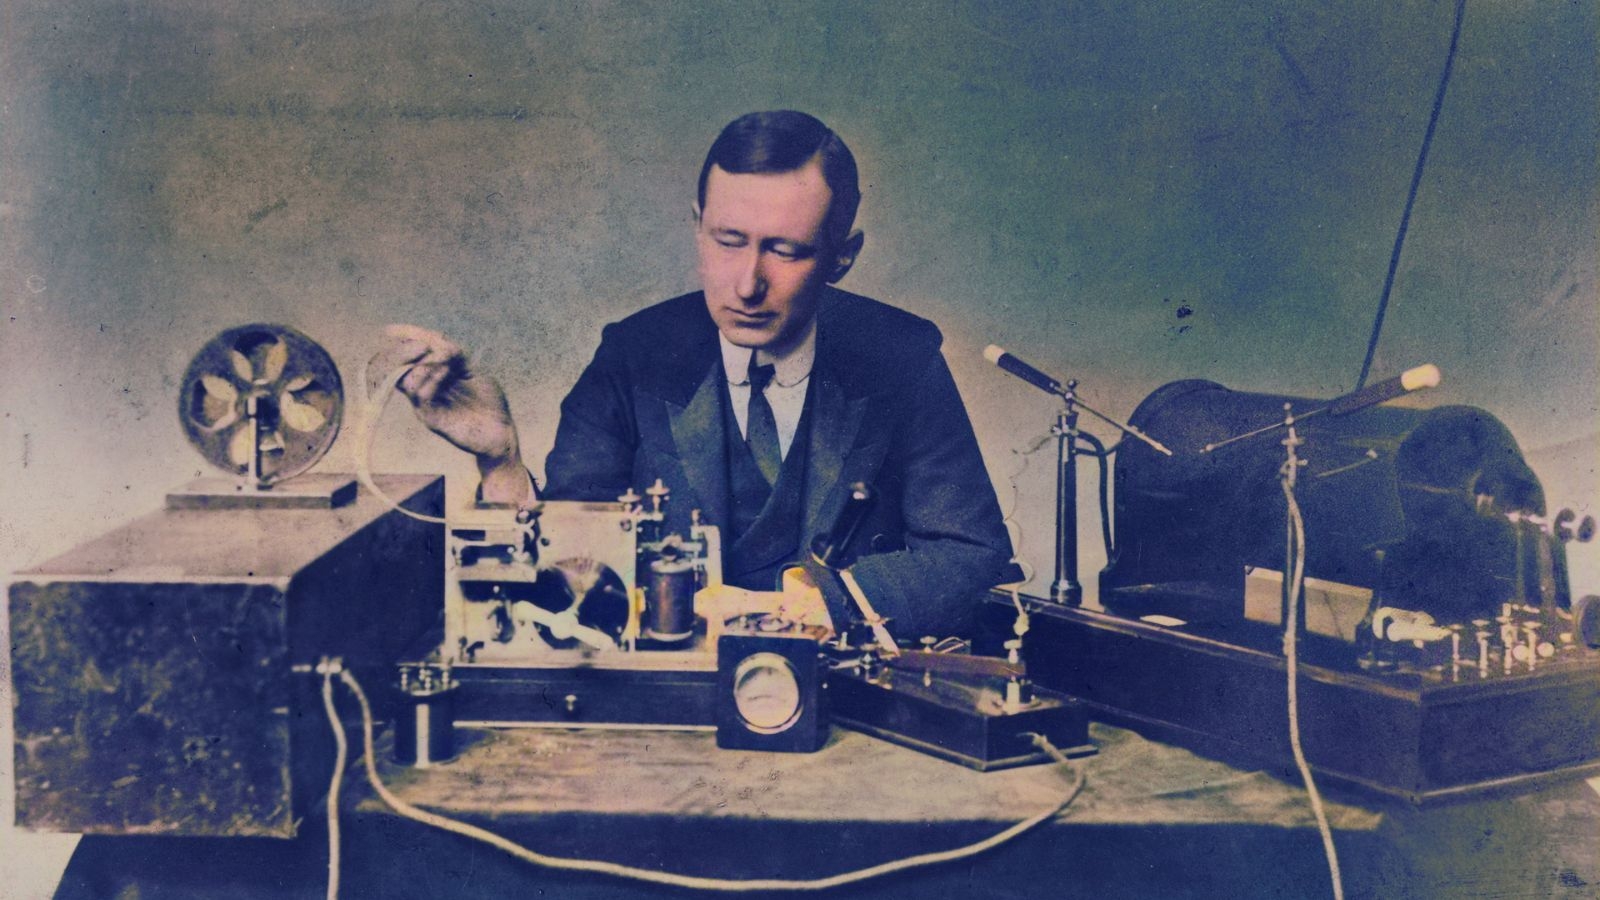 Marconi radio